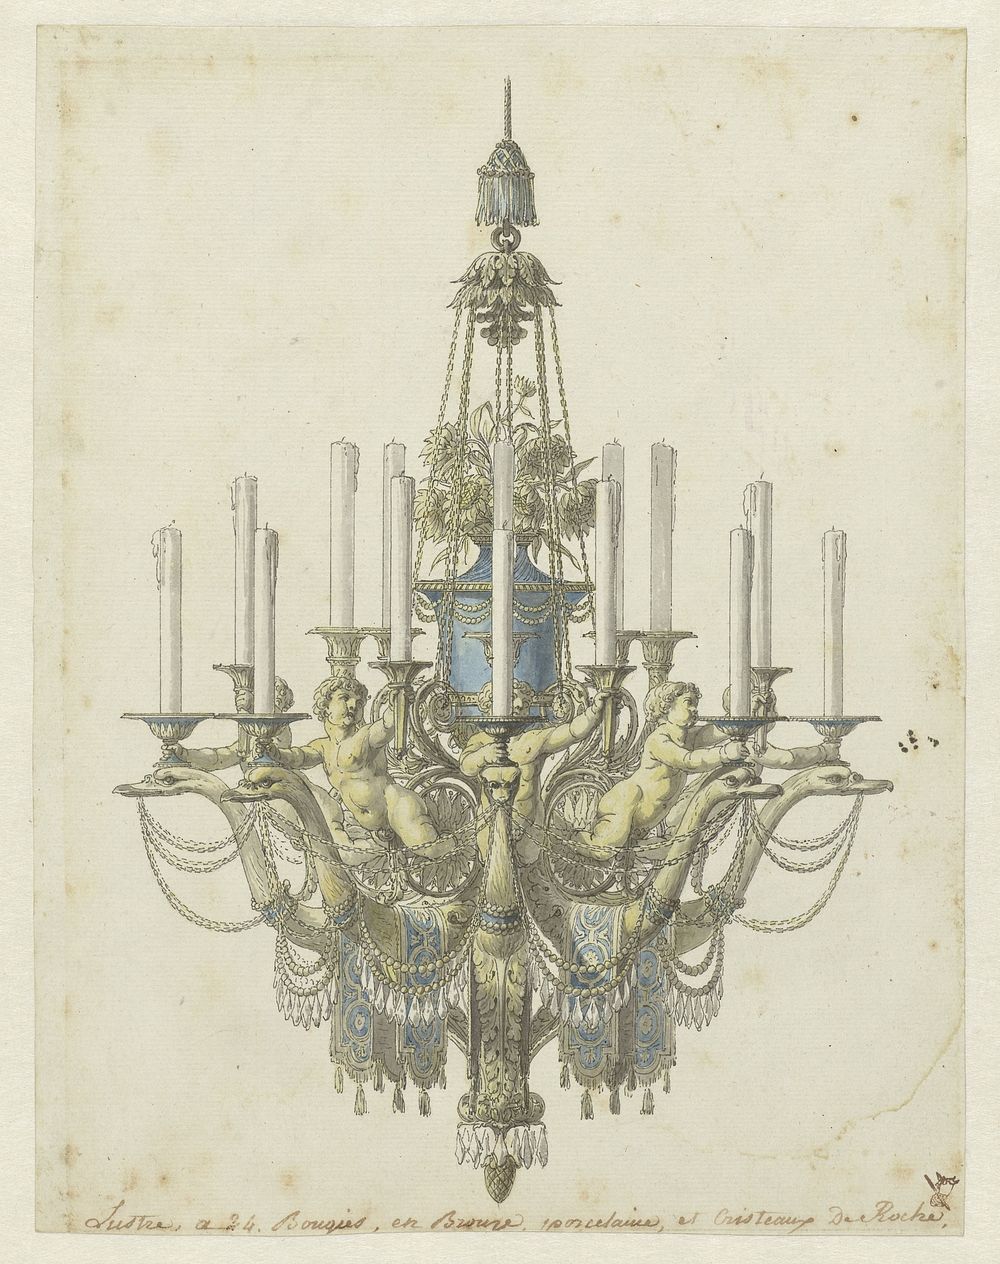 Design for a chandelier (1784) by Jean Démosthène Dugourc